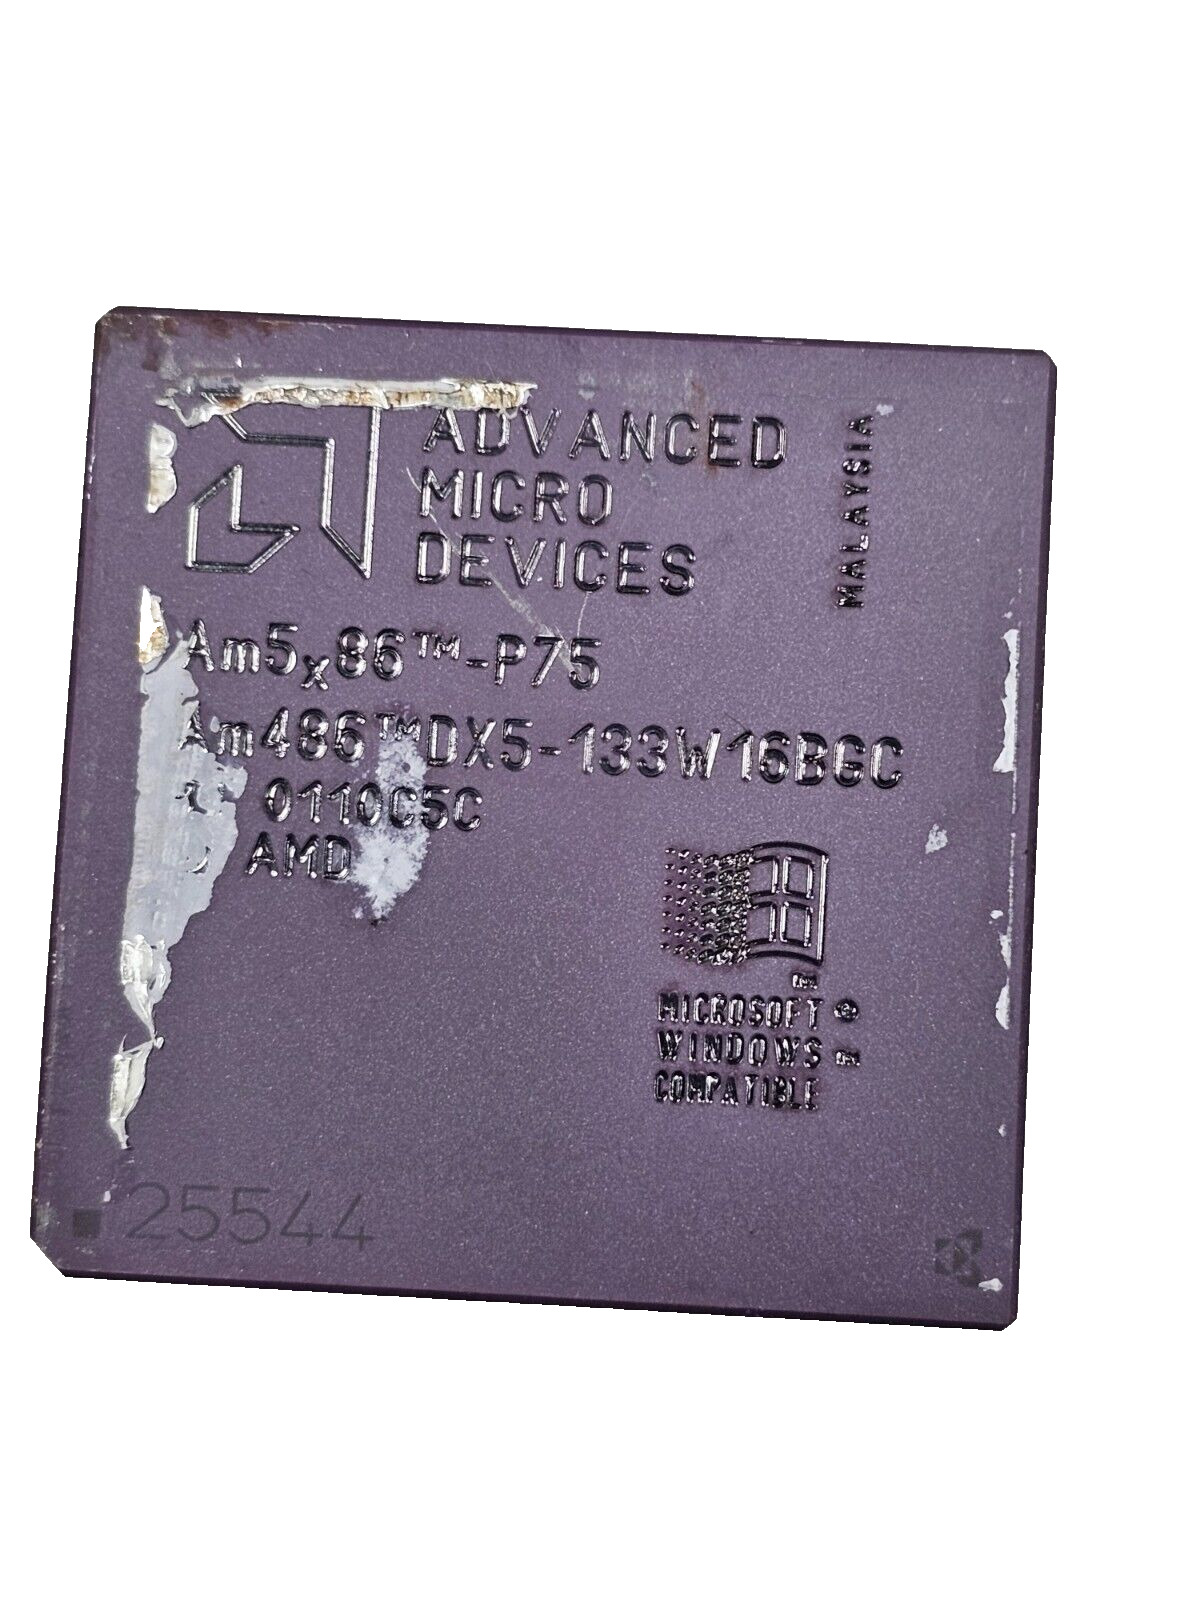 AMD Am486DX5-133W16BGC Am5x86-P75 486 DX5 133 3,45V Vintage CPU GOLD